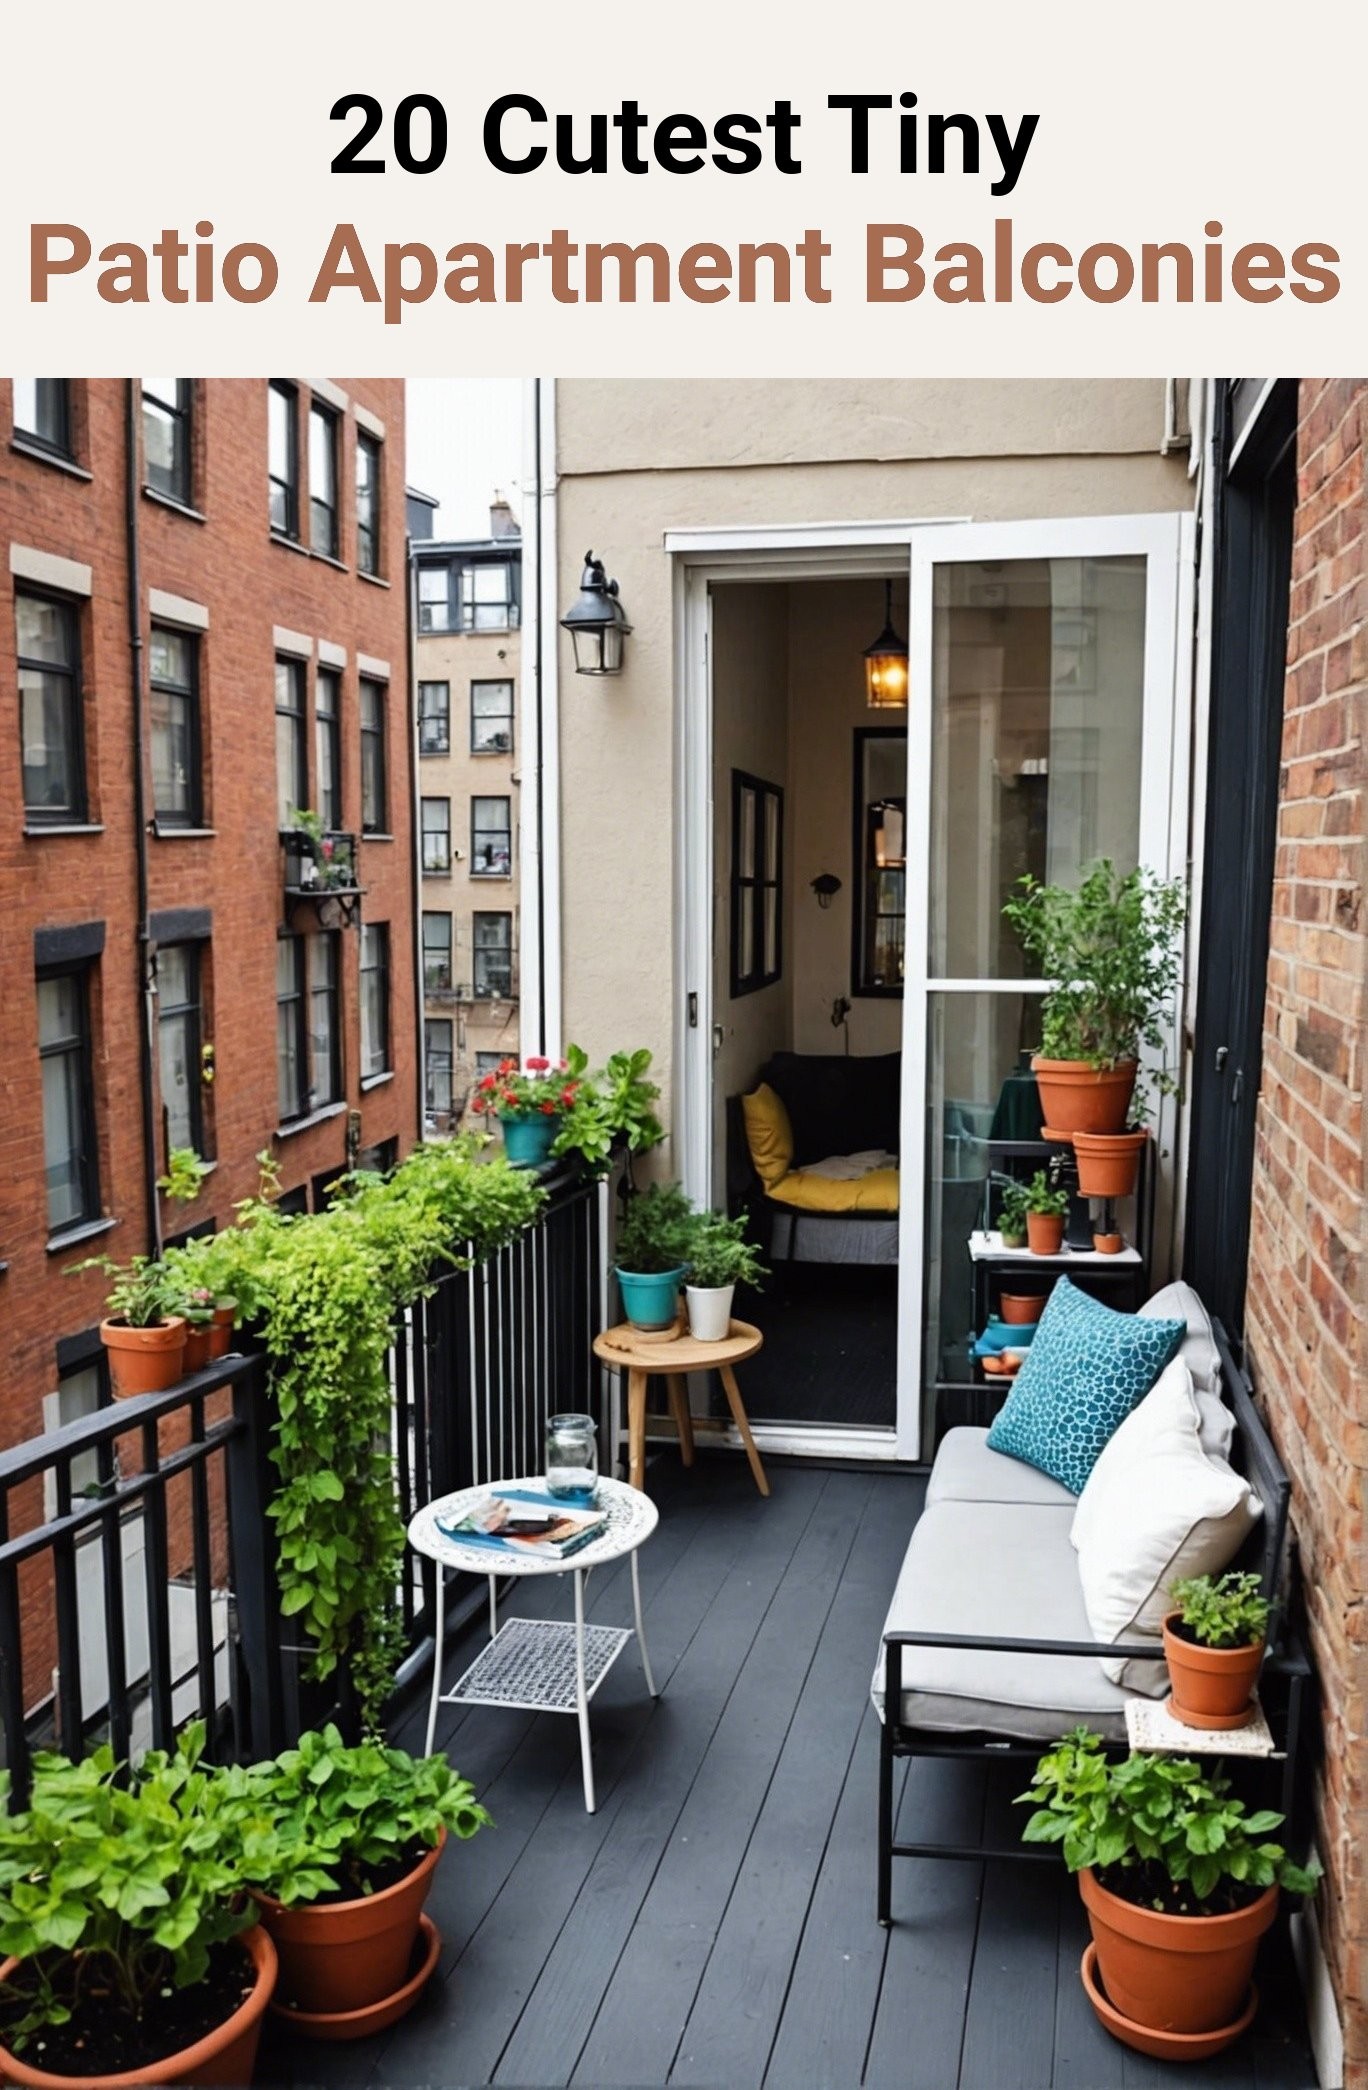 20 Cutest Tiny Patio Apartment Balconies